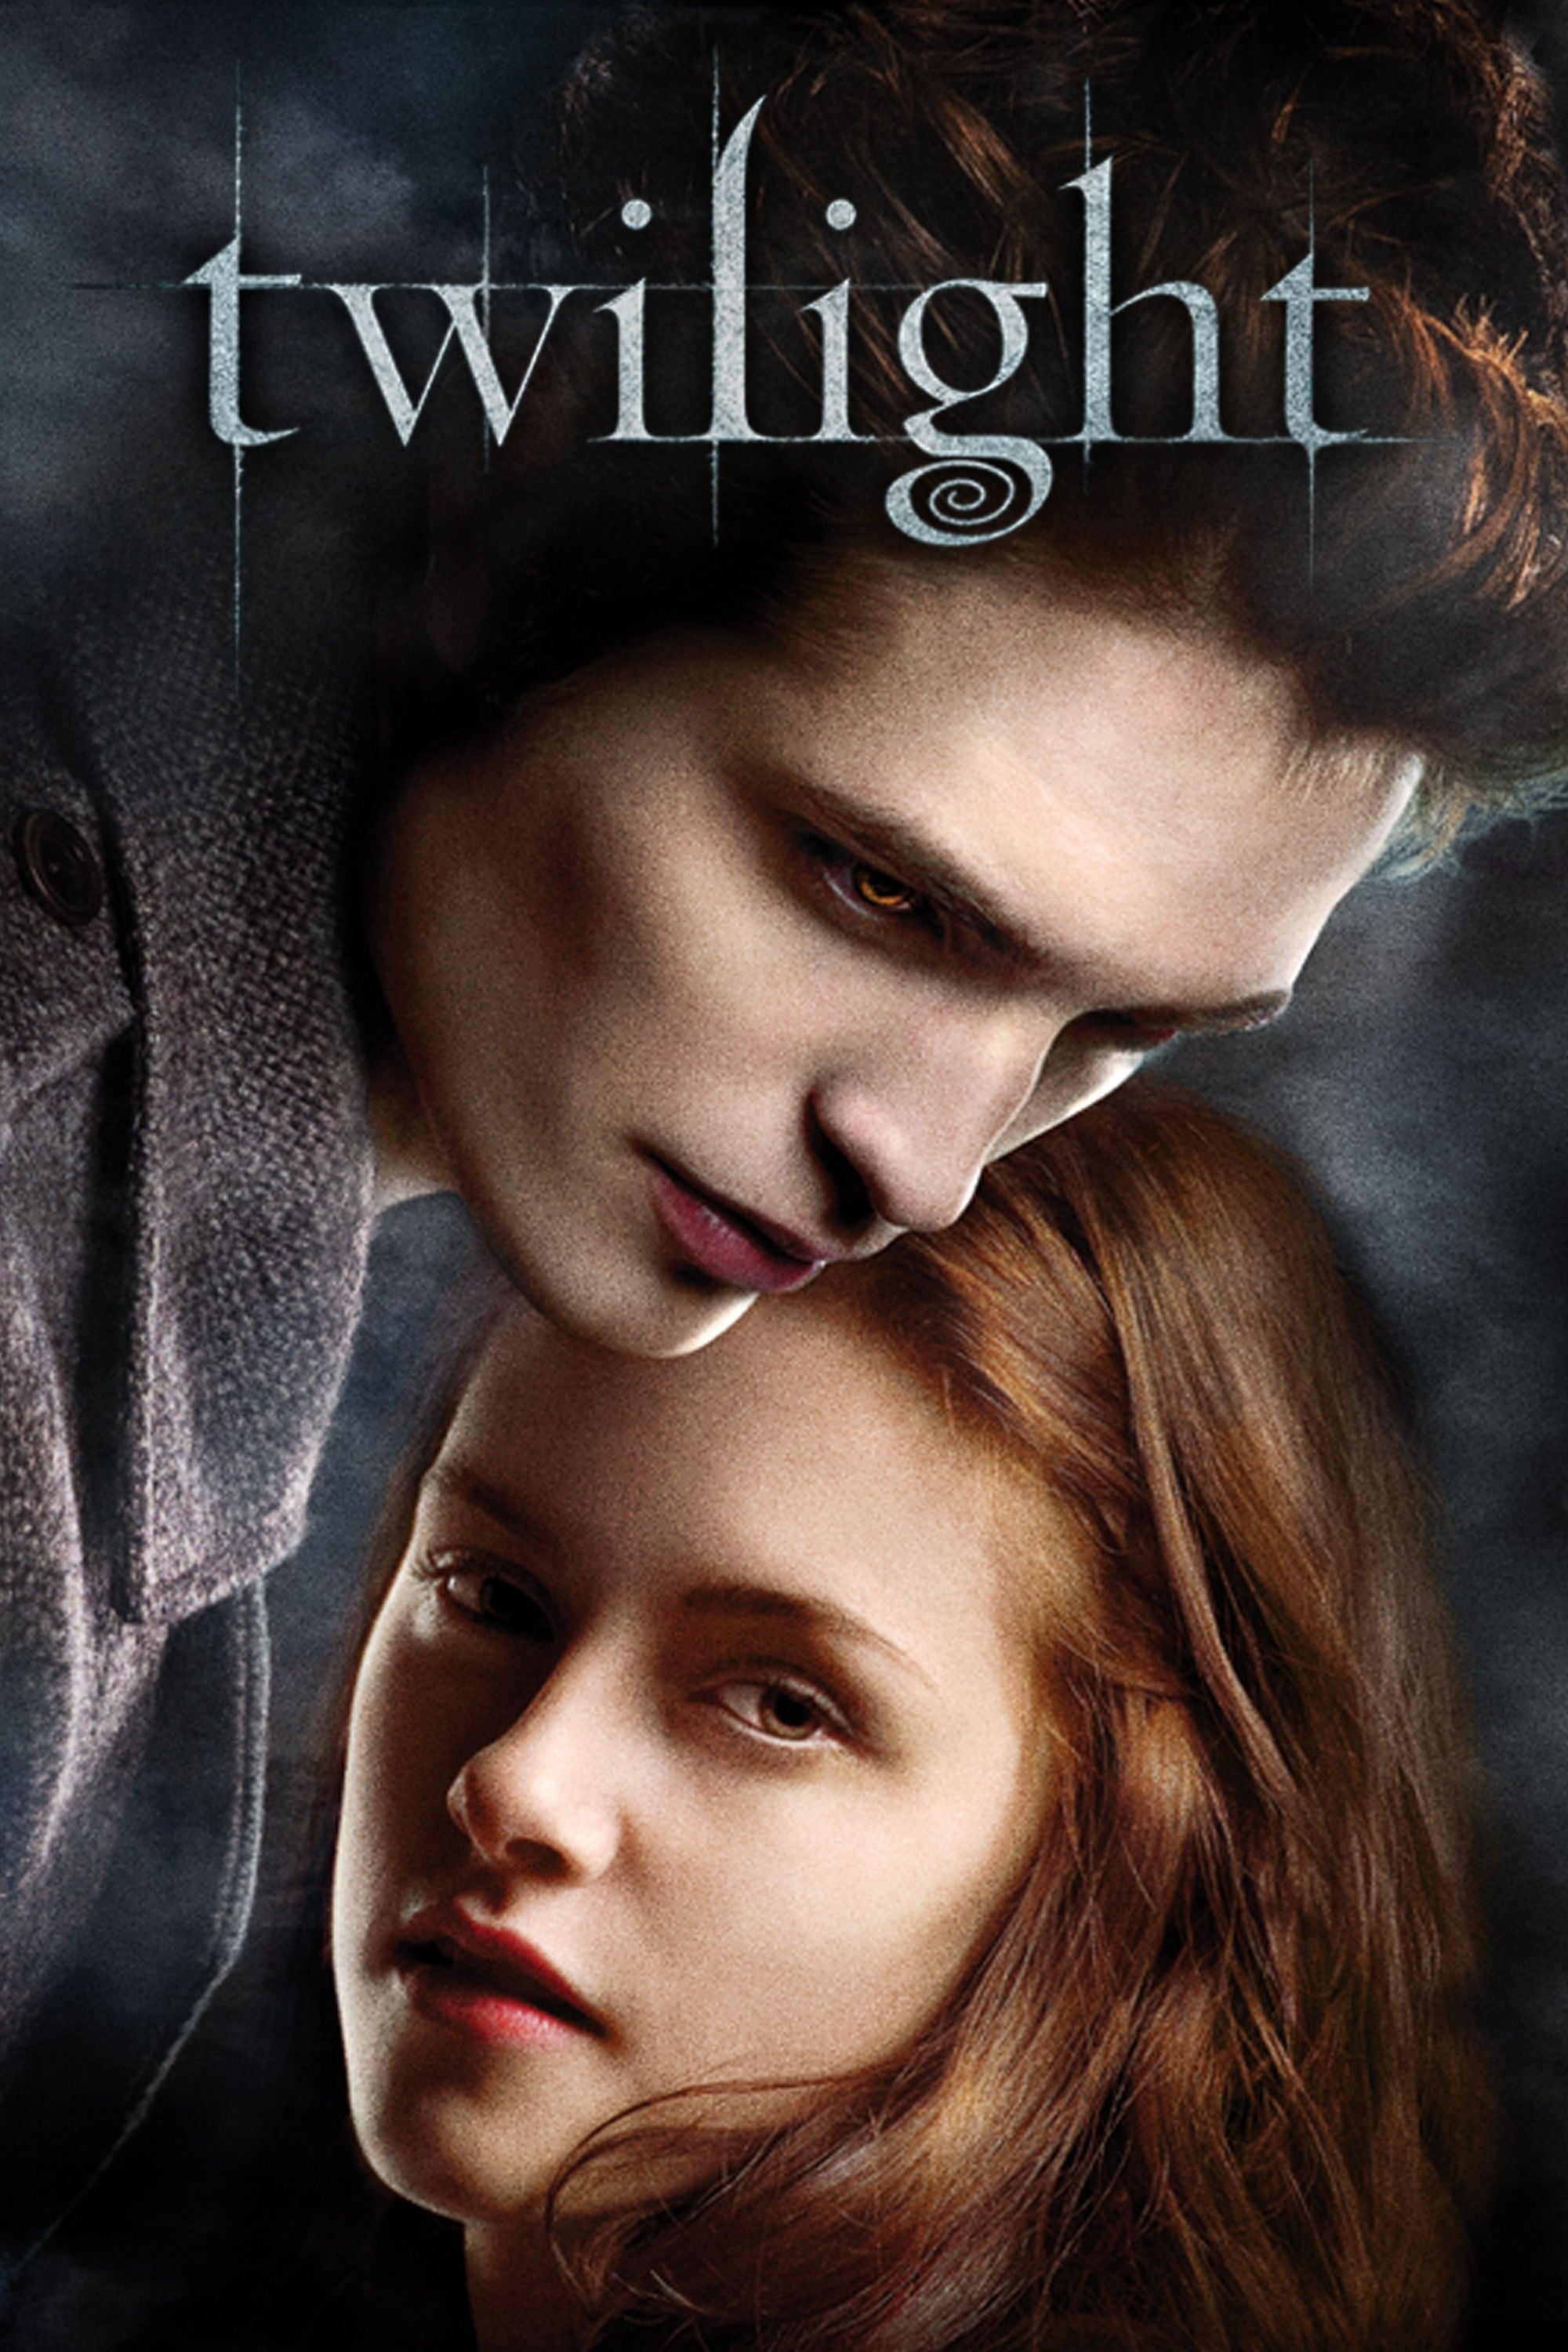 Watch Twilight (2008) Full Movie Online Free - CineFOX - Where Can I Watch The Twilight Saga For Free